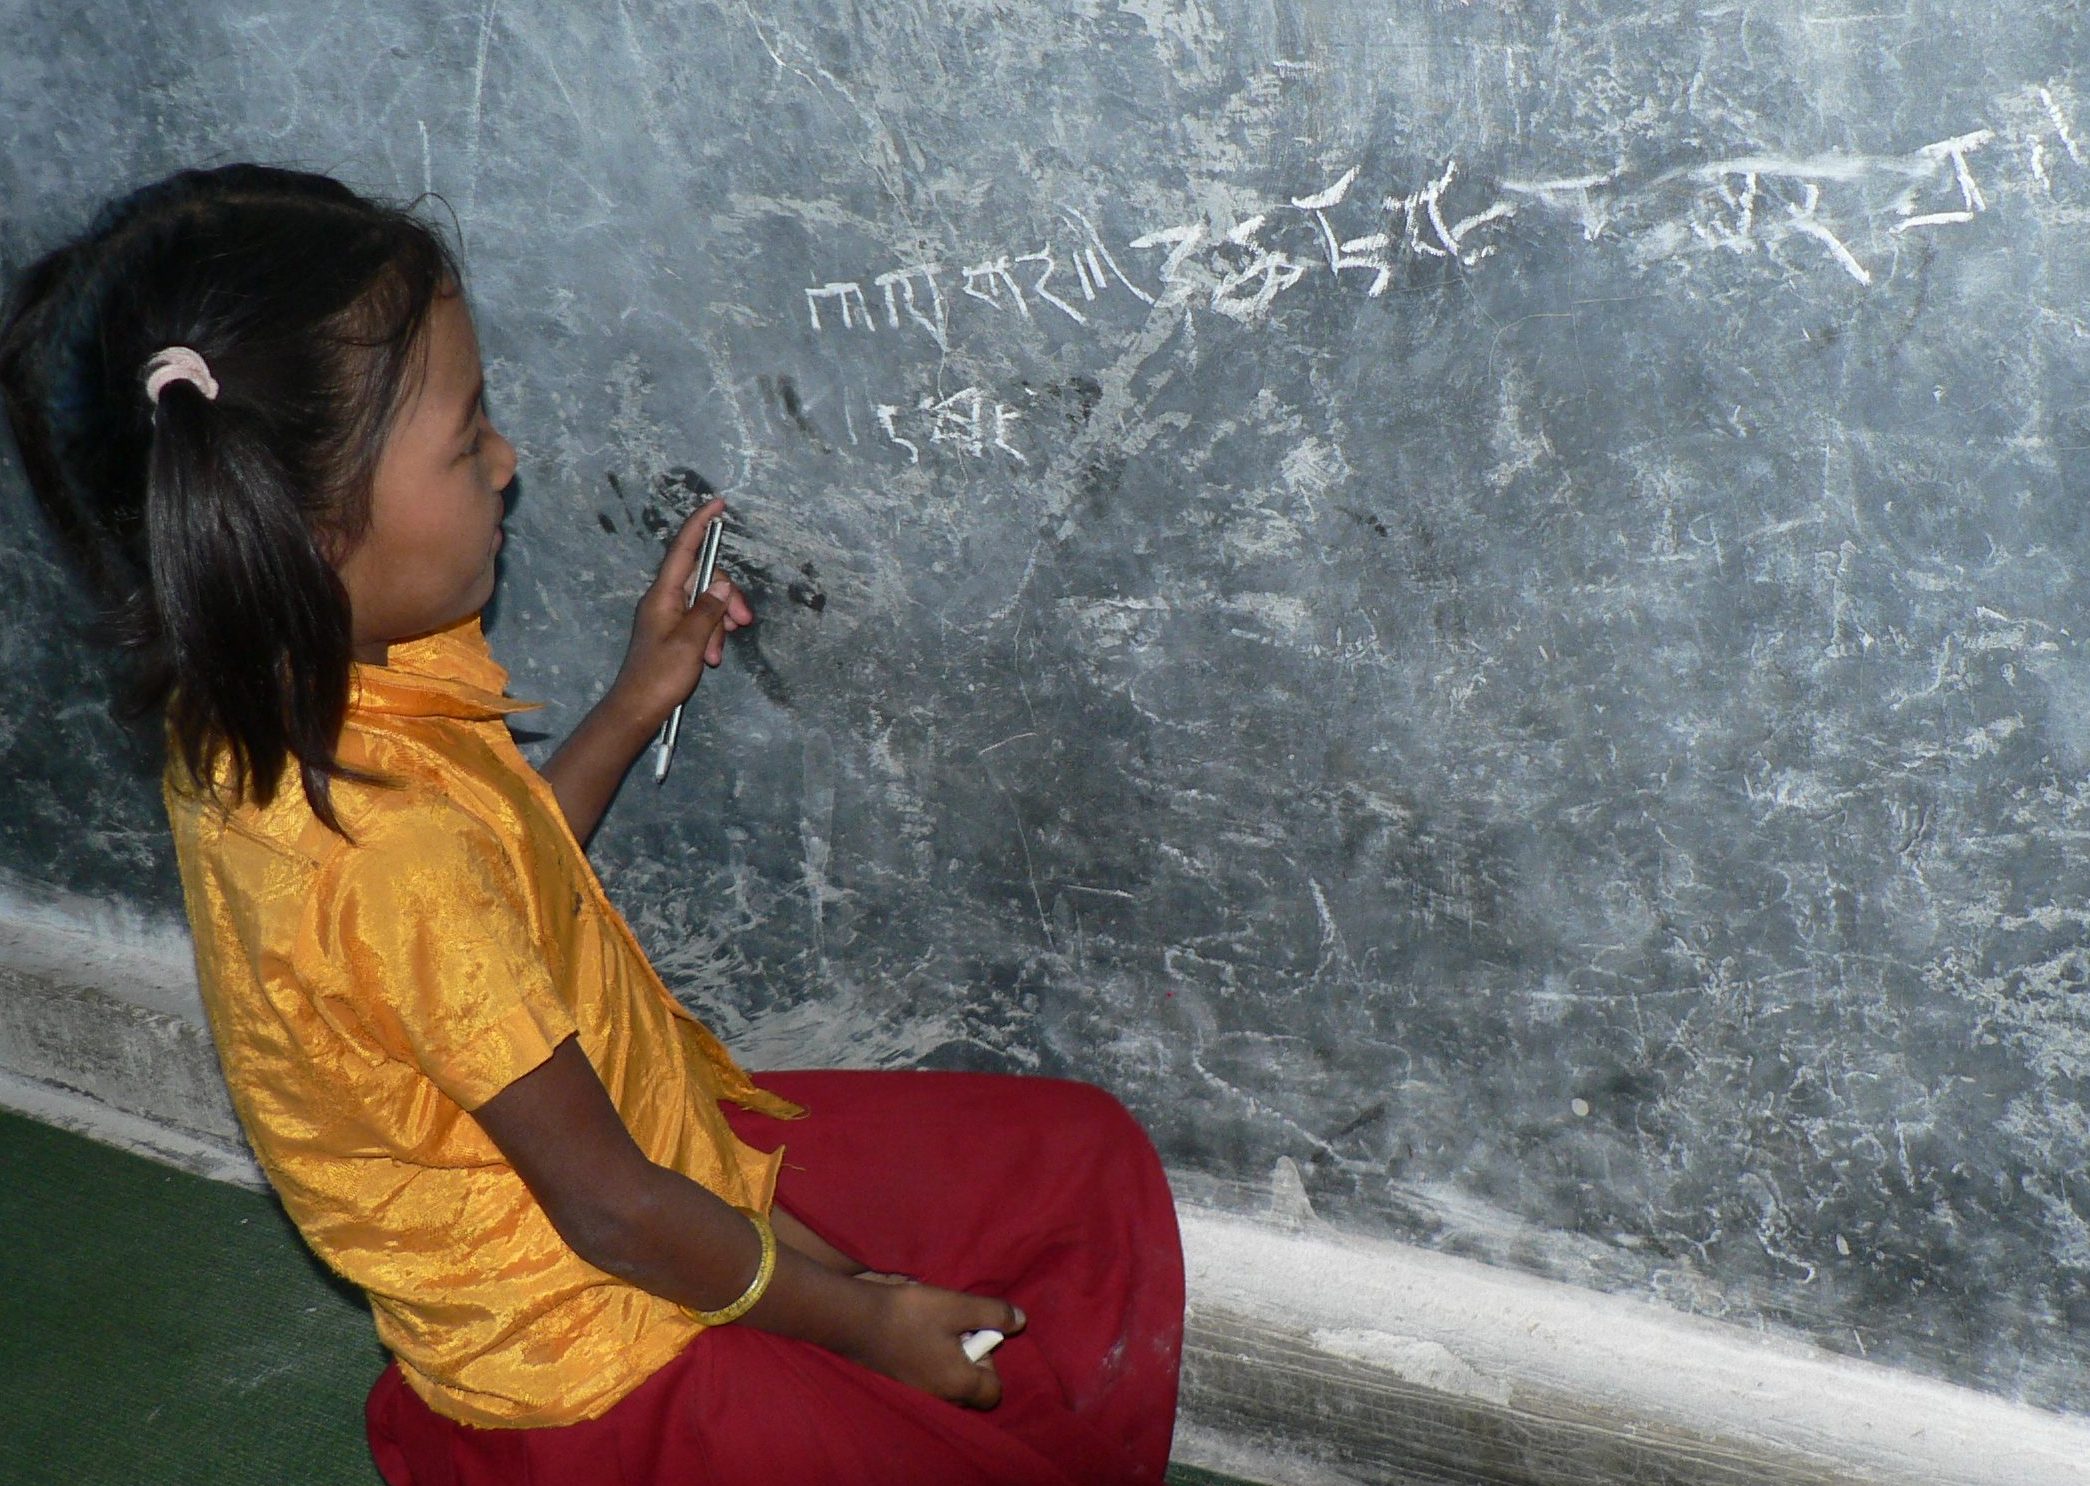 Student at Dawa Dhechen Chhyolin Gumba (Buddhist School), Gaighat Udayapur, Nepal (image: Hilary Smith)